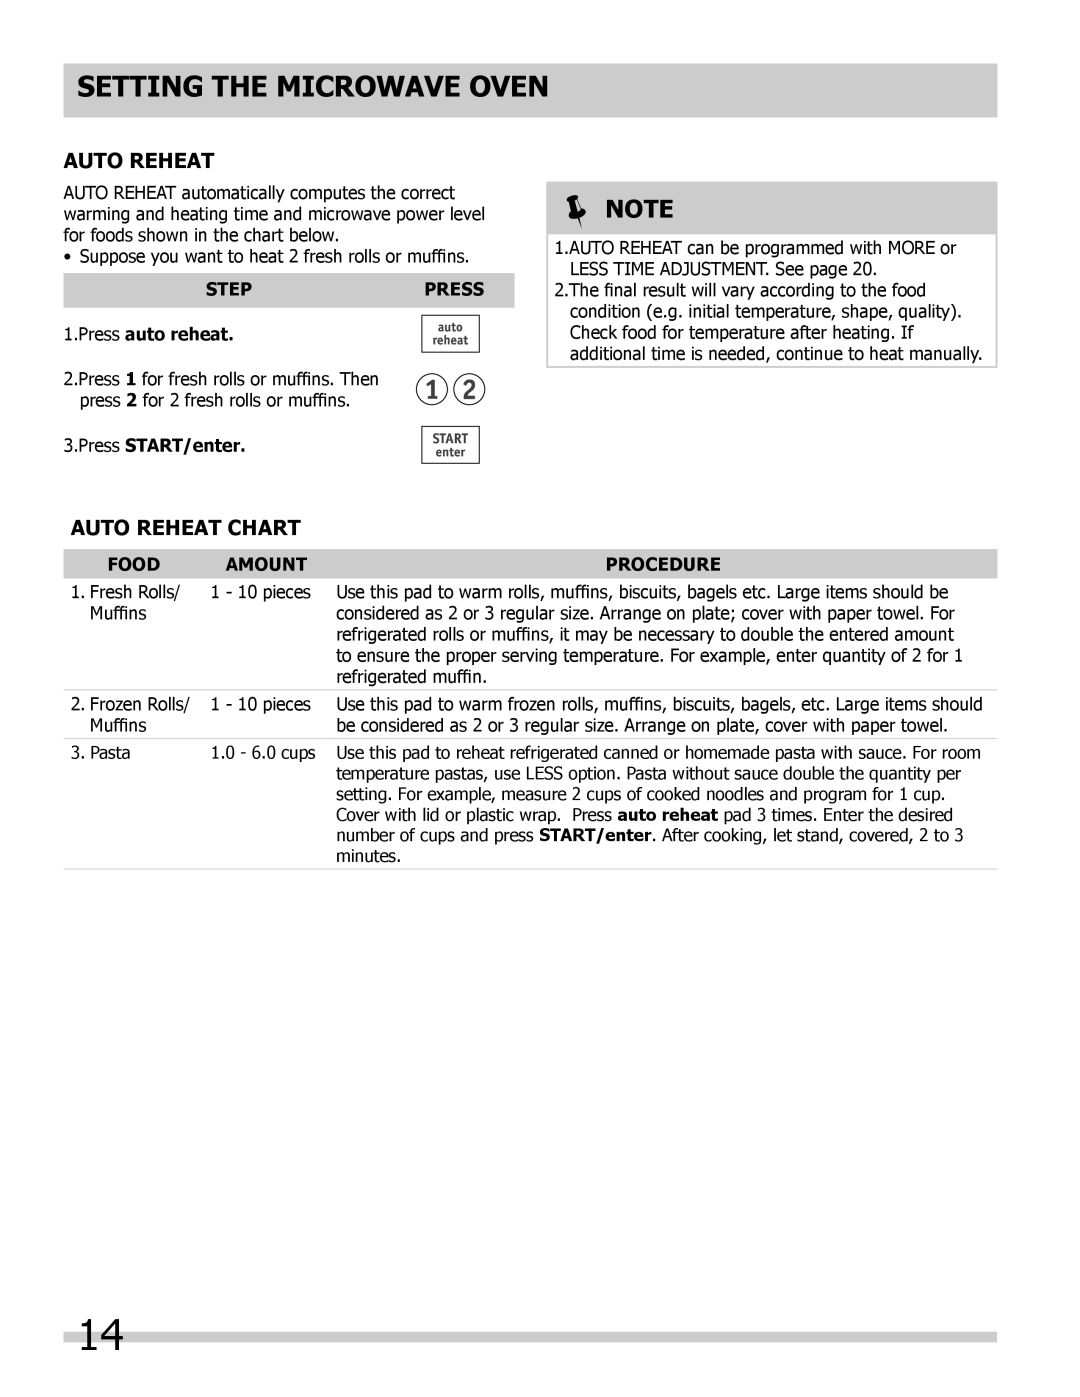 Frigidaire 318205300 Auto Reheat Chart, SETTING THE Microwave oven,  Note, StepPress 1.Press auto reheat, Food 